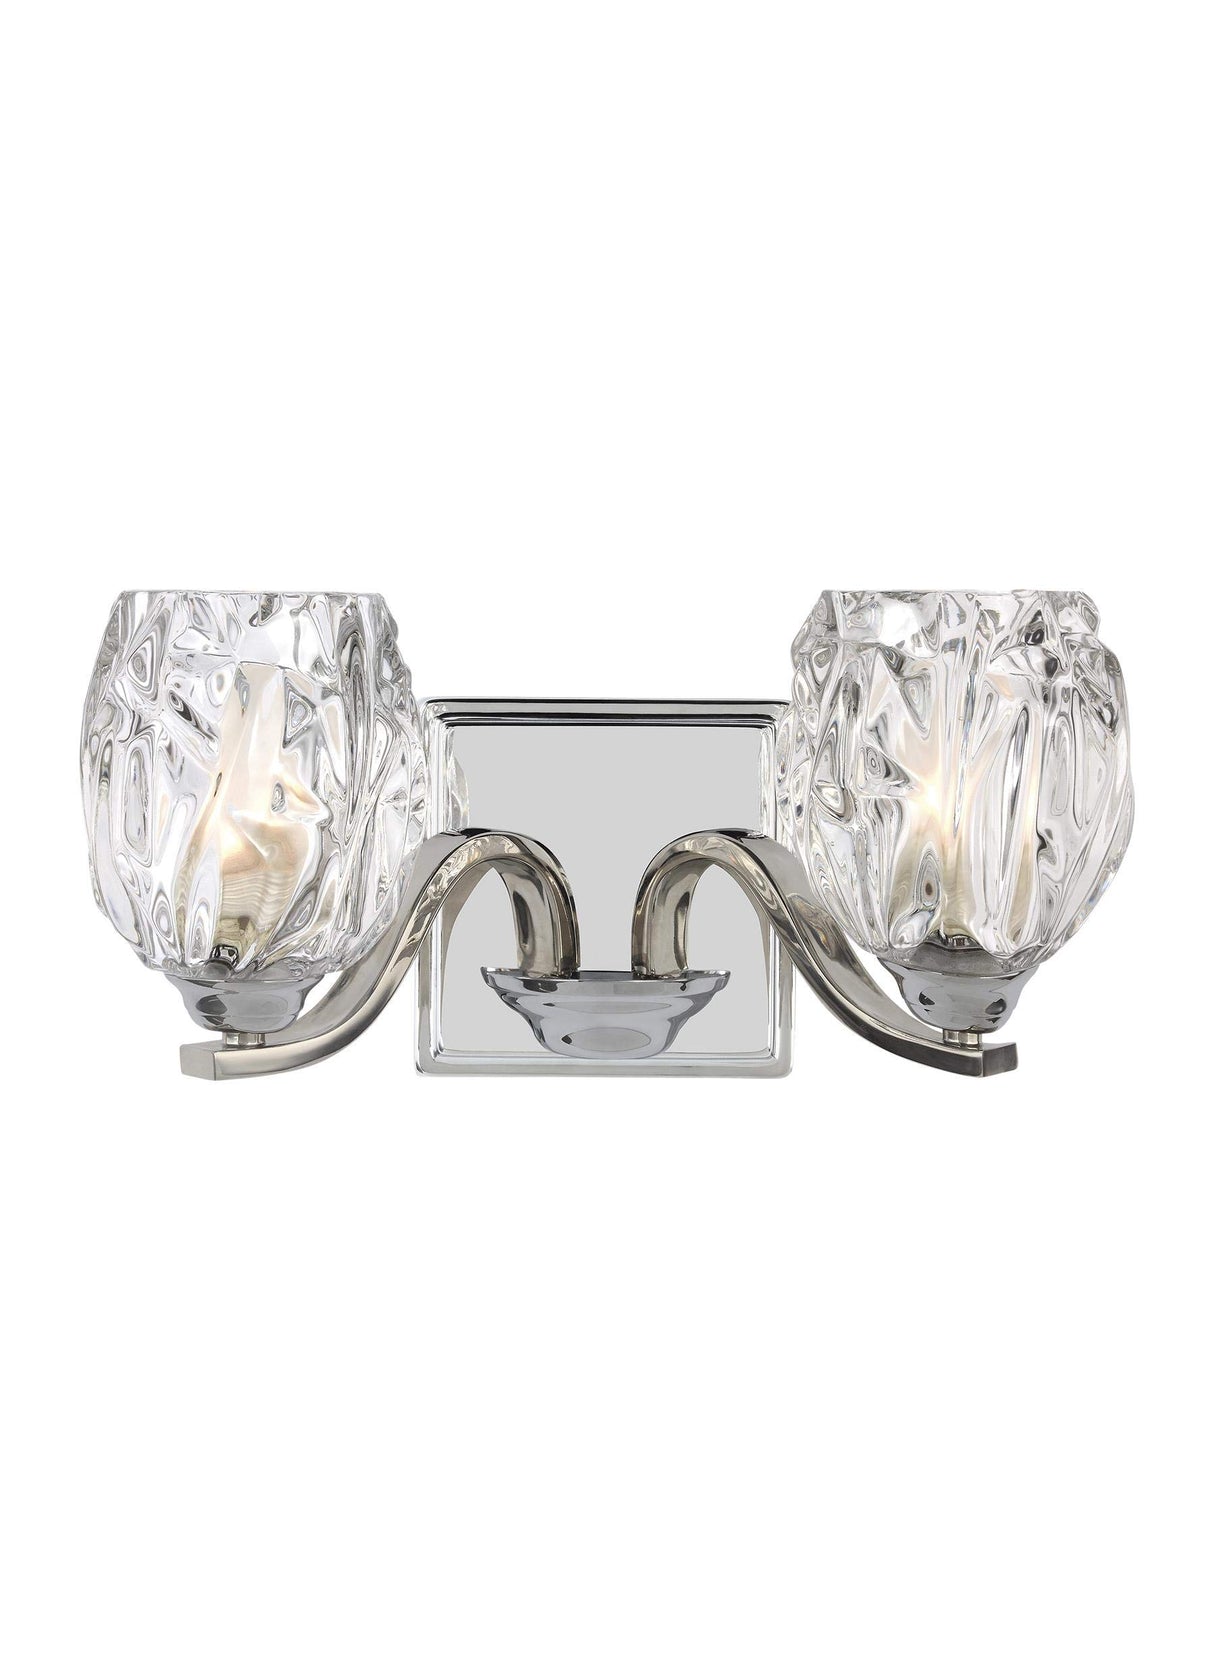 Feiss VS22702CH-L1 Kalli LED Crystal Glass Wall Vanity Bath Lighting, 2-Light 10 Watt (13"W x 6"H), Chrome